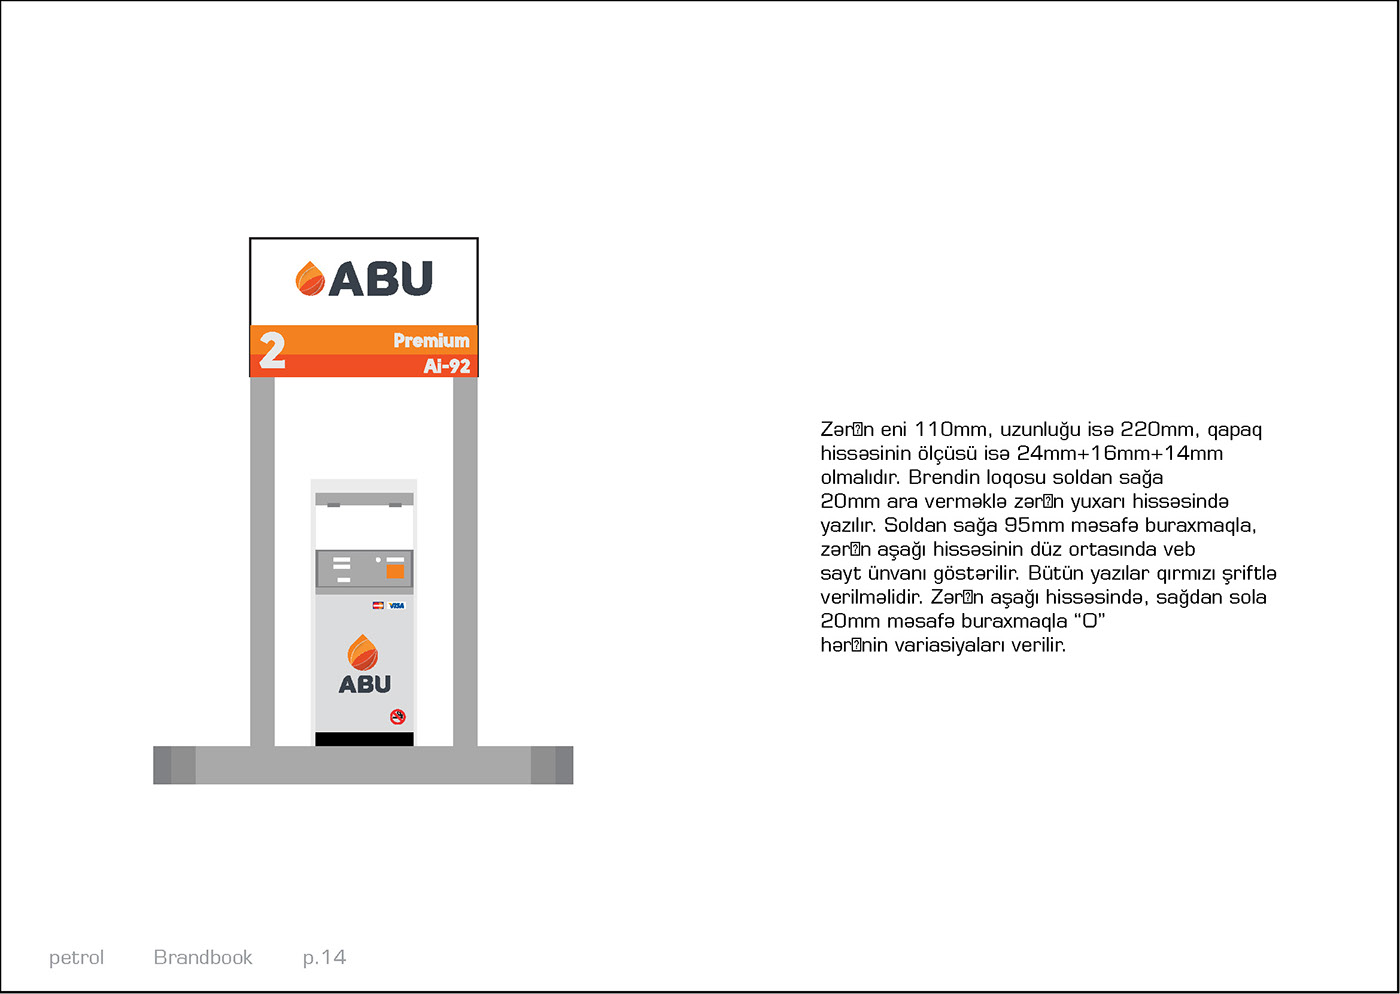 petrol oil logo baku azerbaijan fuel STATION abu abupetrol